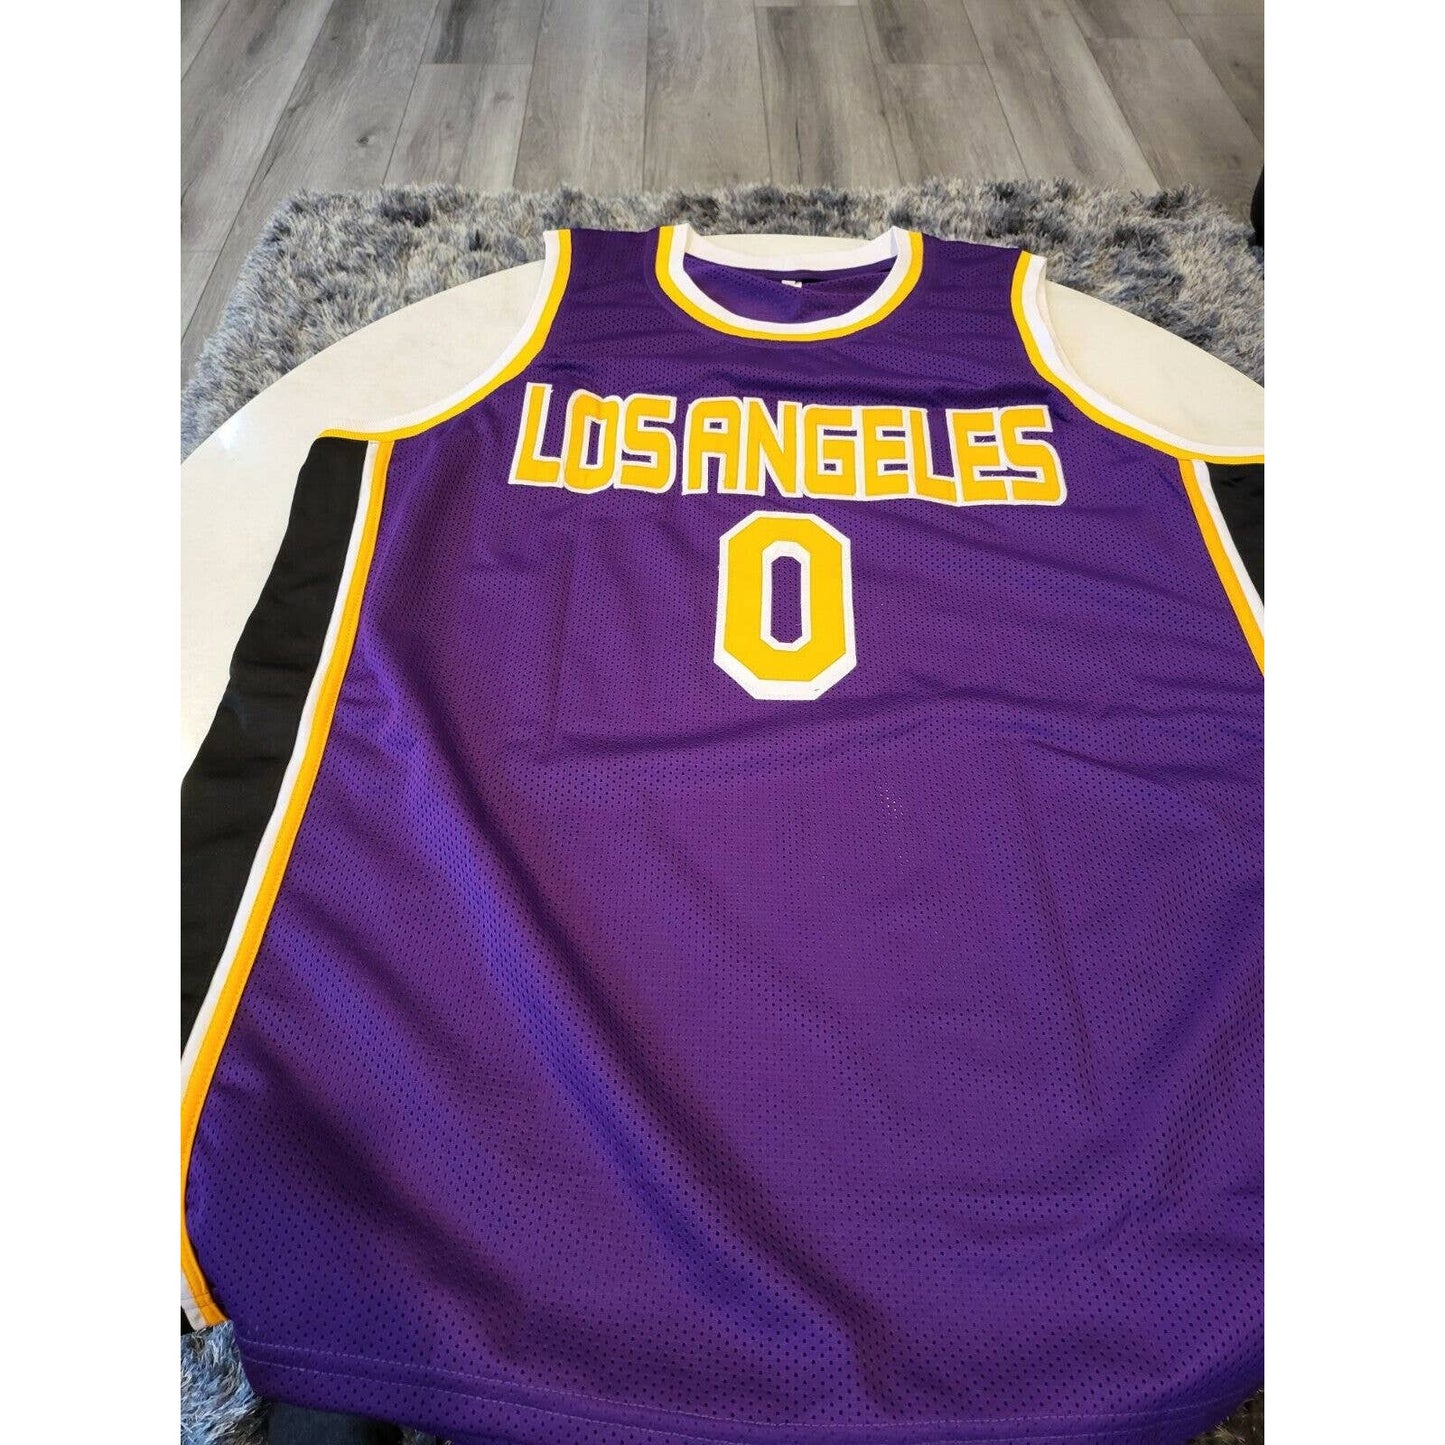 Kyle Kuzma Autographed/Signed Jersey Beckett COA Los Angeles Lakers LA - TreasuresEvolved